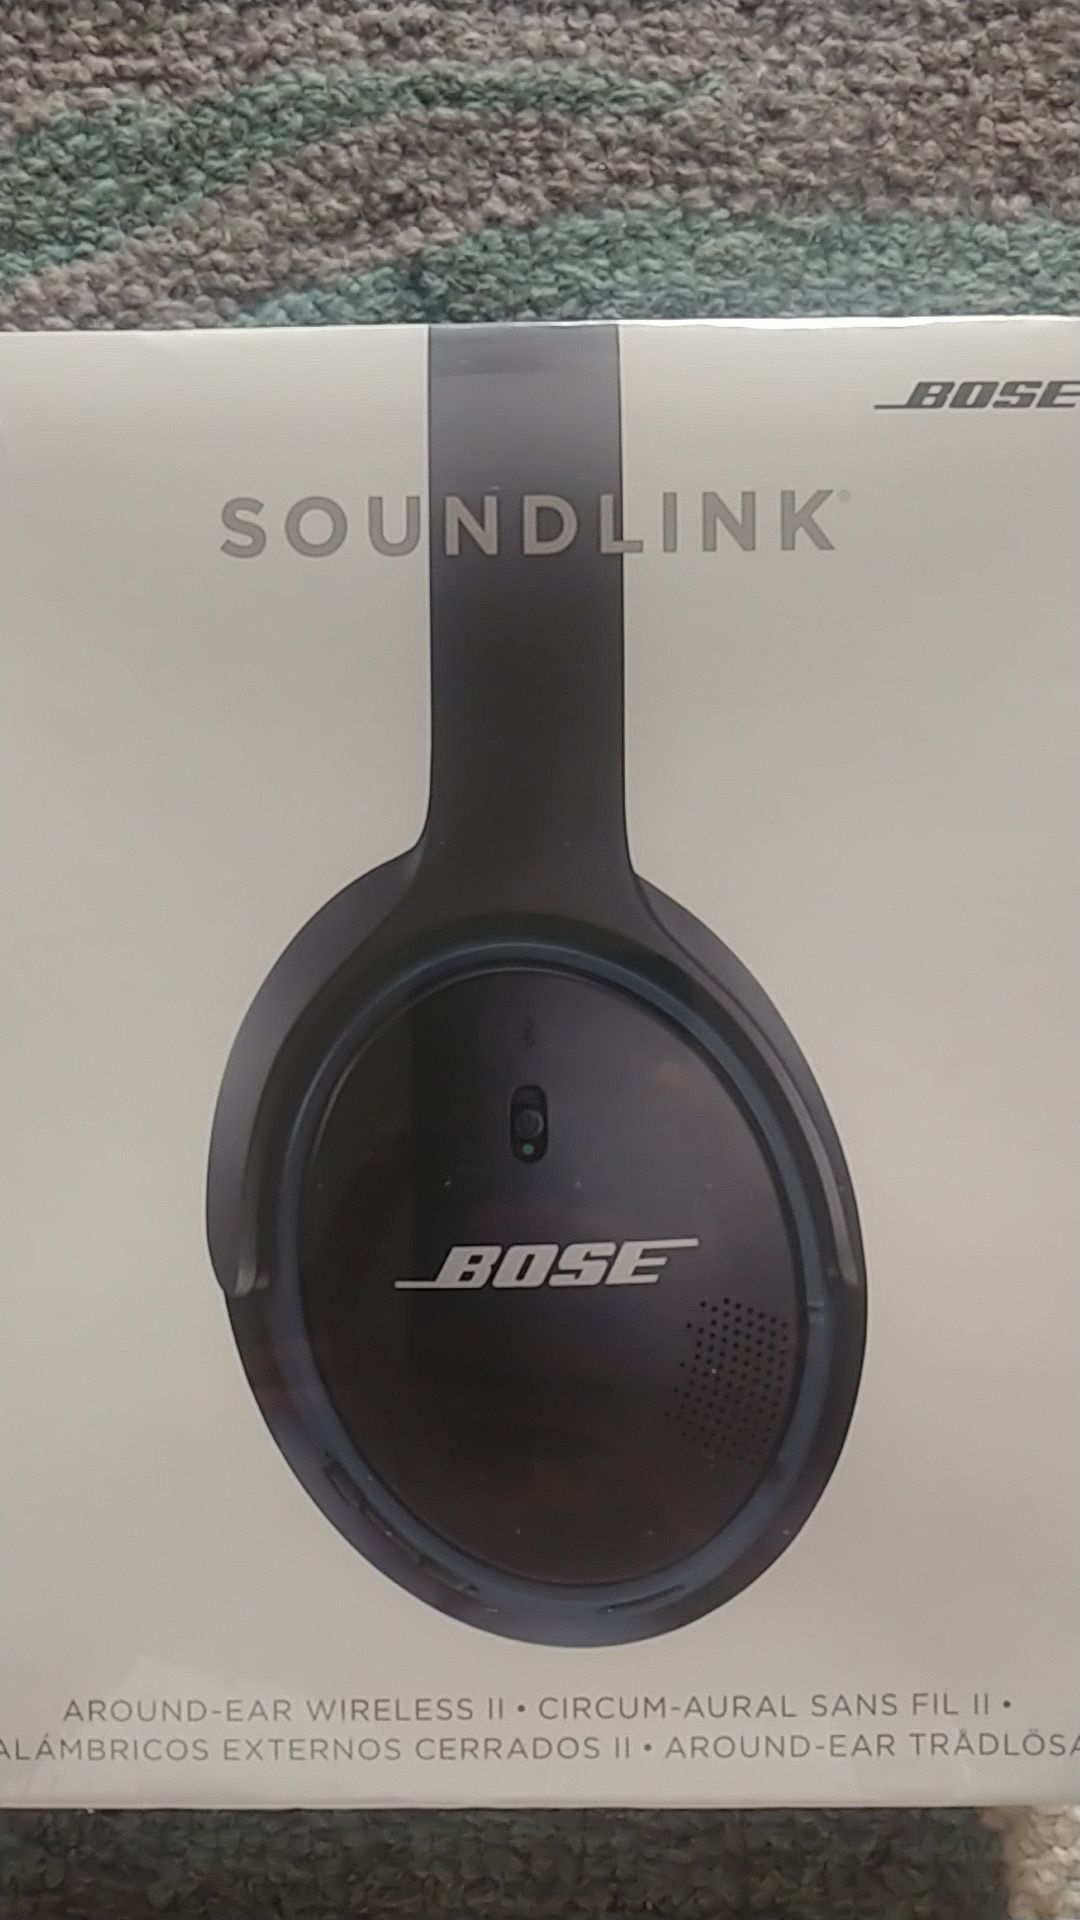 BOSE SOUNDLINK around-ear wireless II